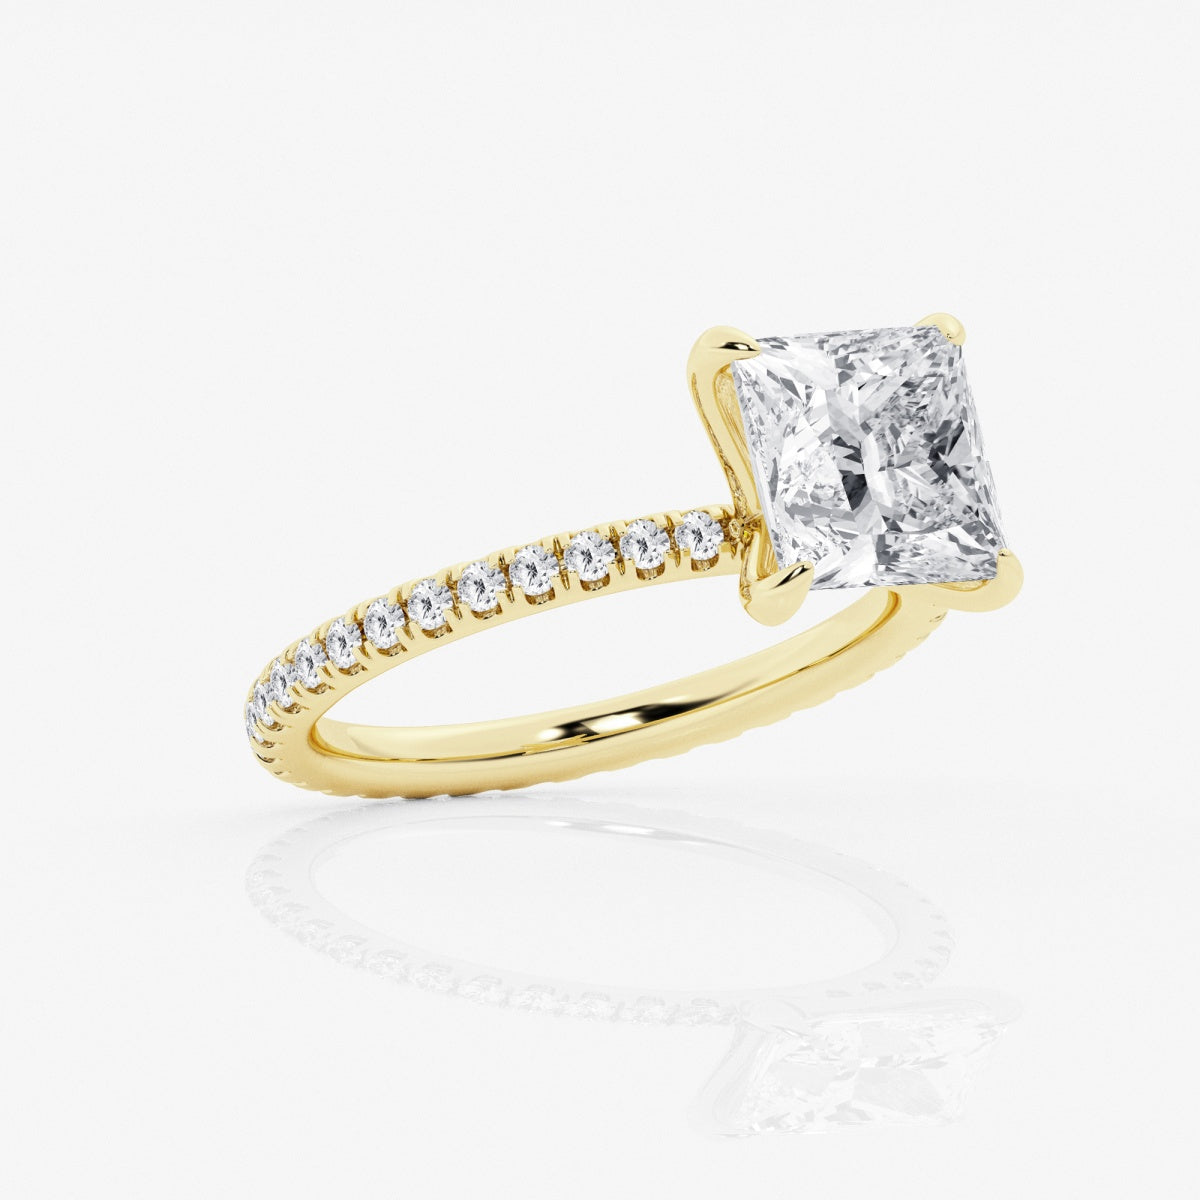 3 Carat Princess Cut Moissanite Diamond Engagement Ring